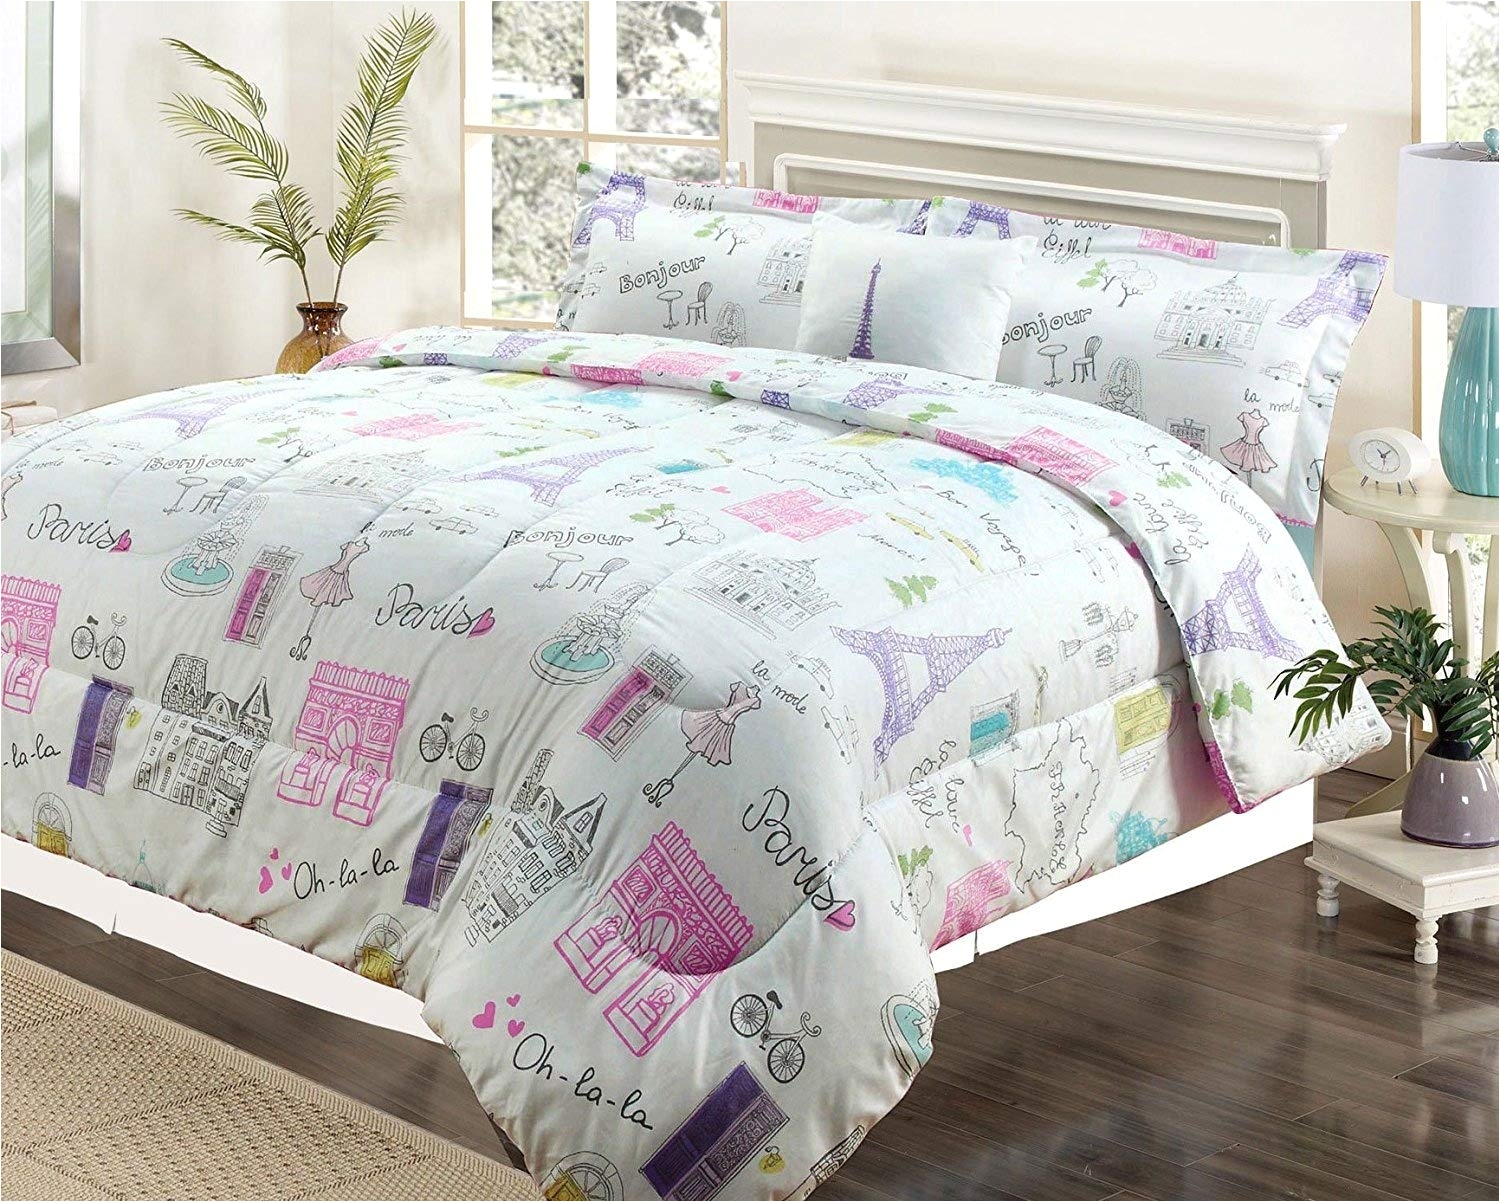 amazon com full 4 pc bedding girls comforter bed set paris eiffel tower bonjour pink purple home kitchen